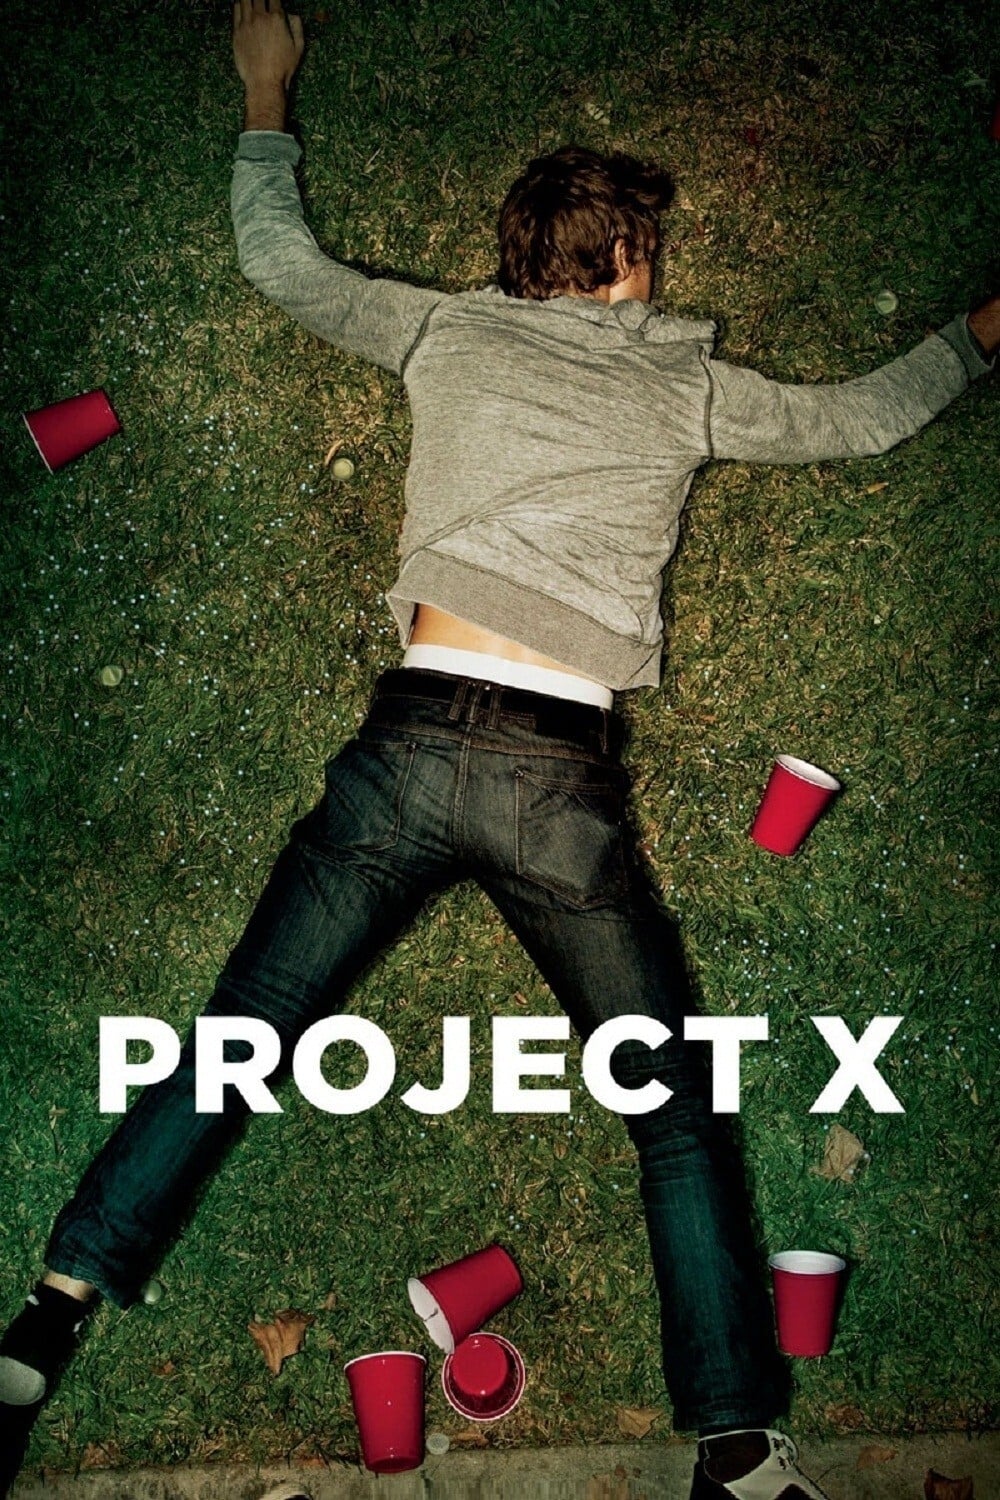 Proyecto X